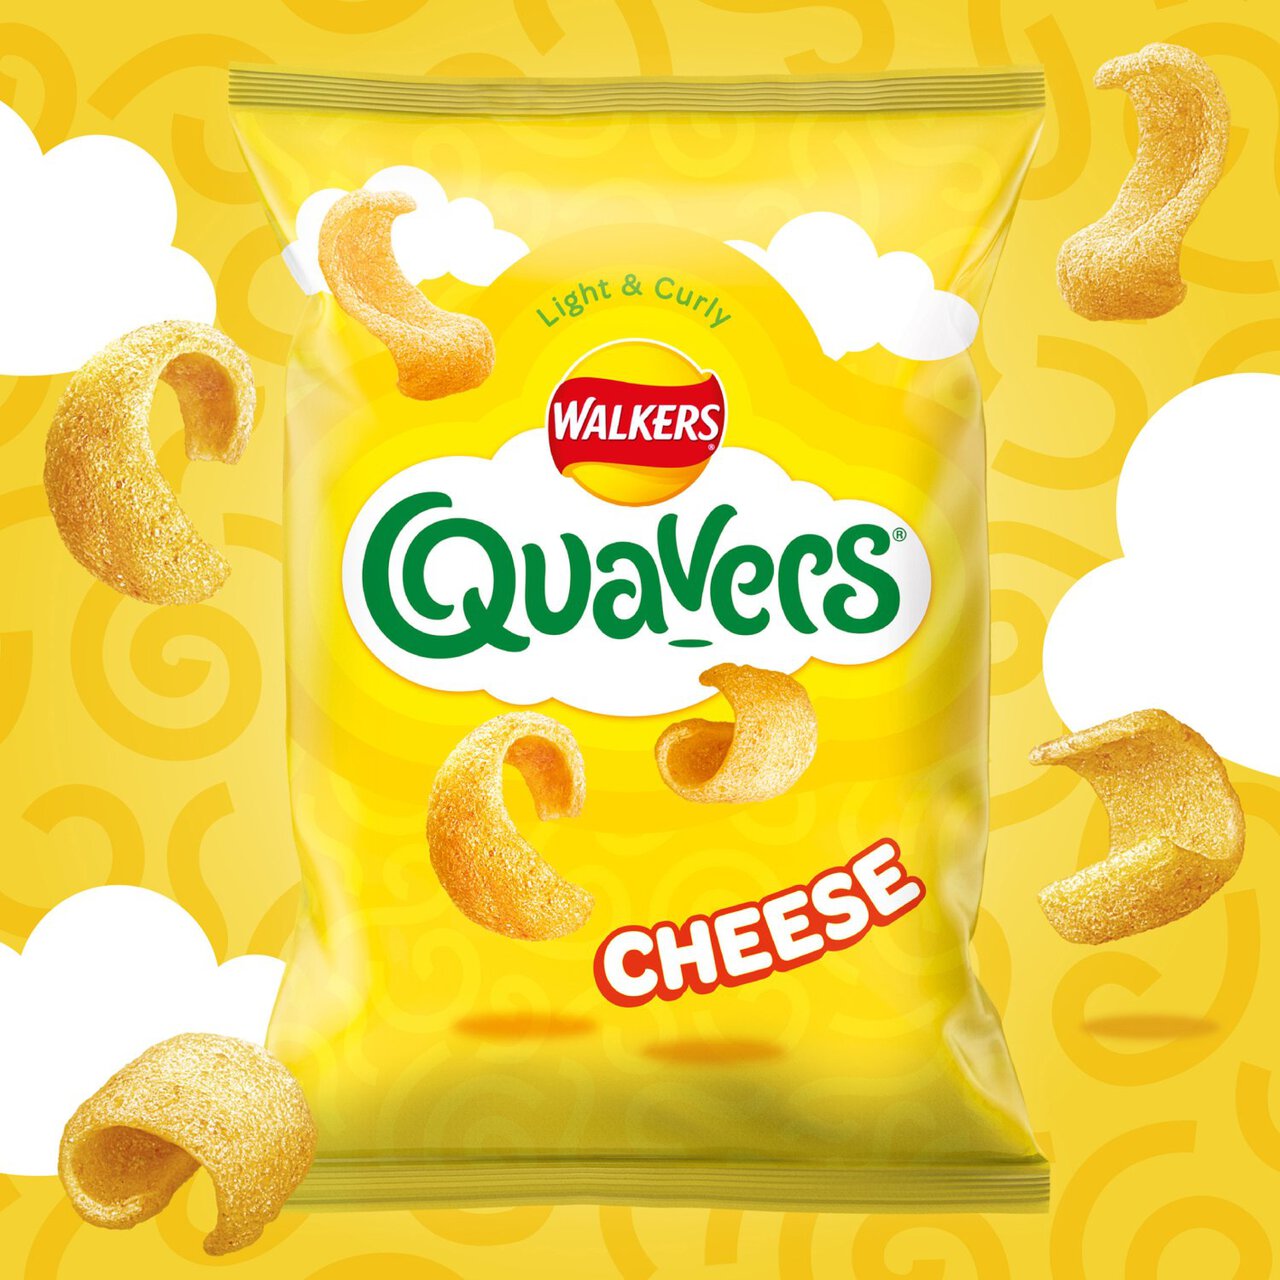 Walkers Quavers Cheese Multipack Snacks 6 per pack